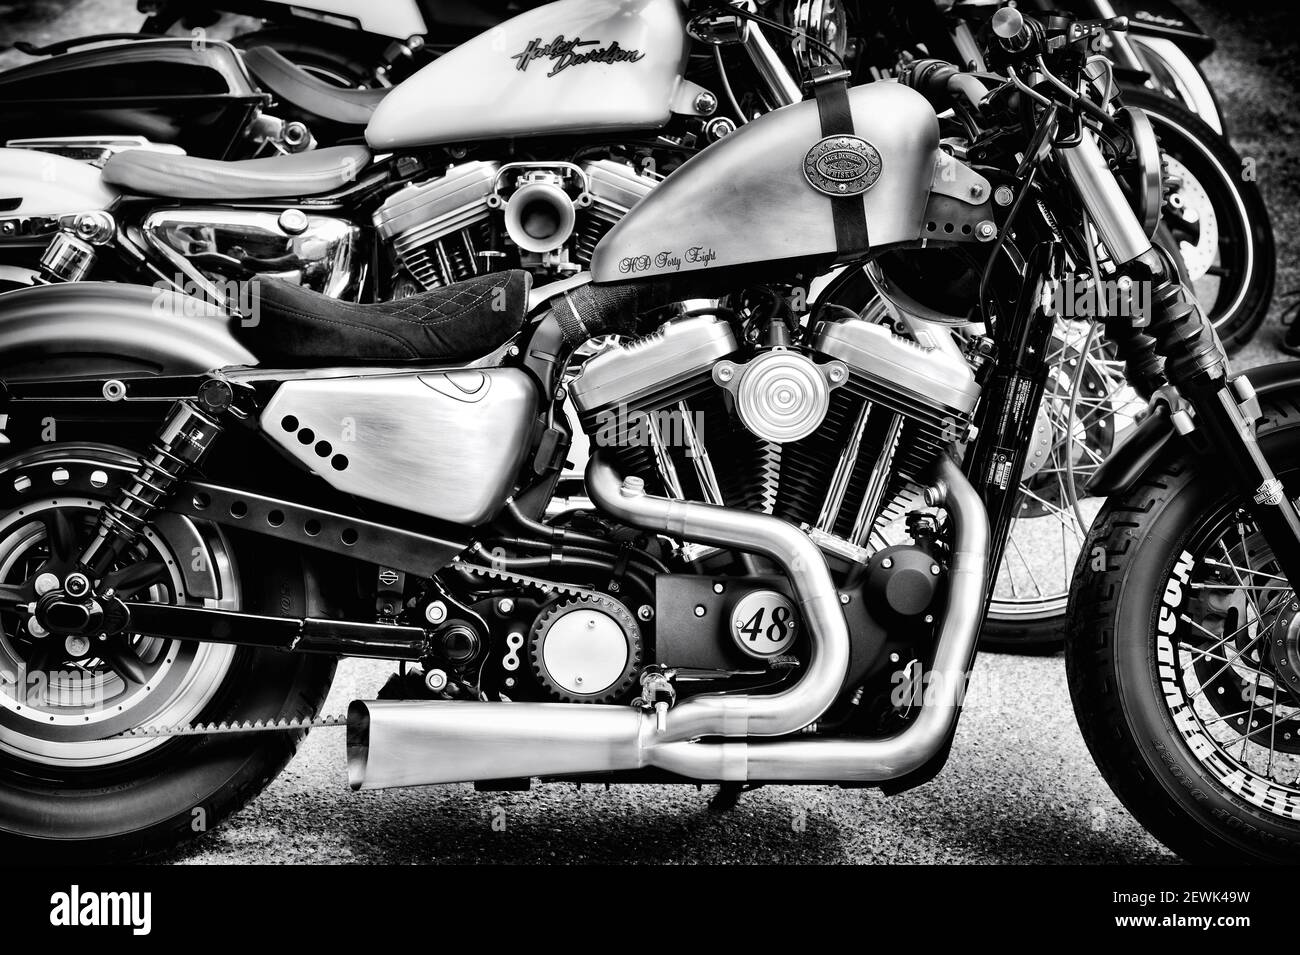 Harley Davidson 48 custom motorcycle. Black and White Stock Photo